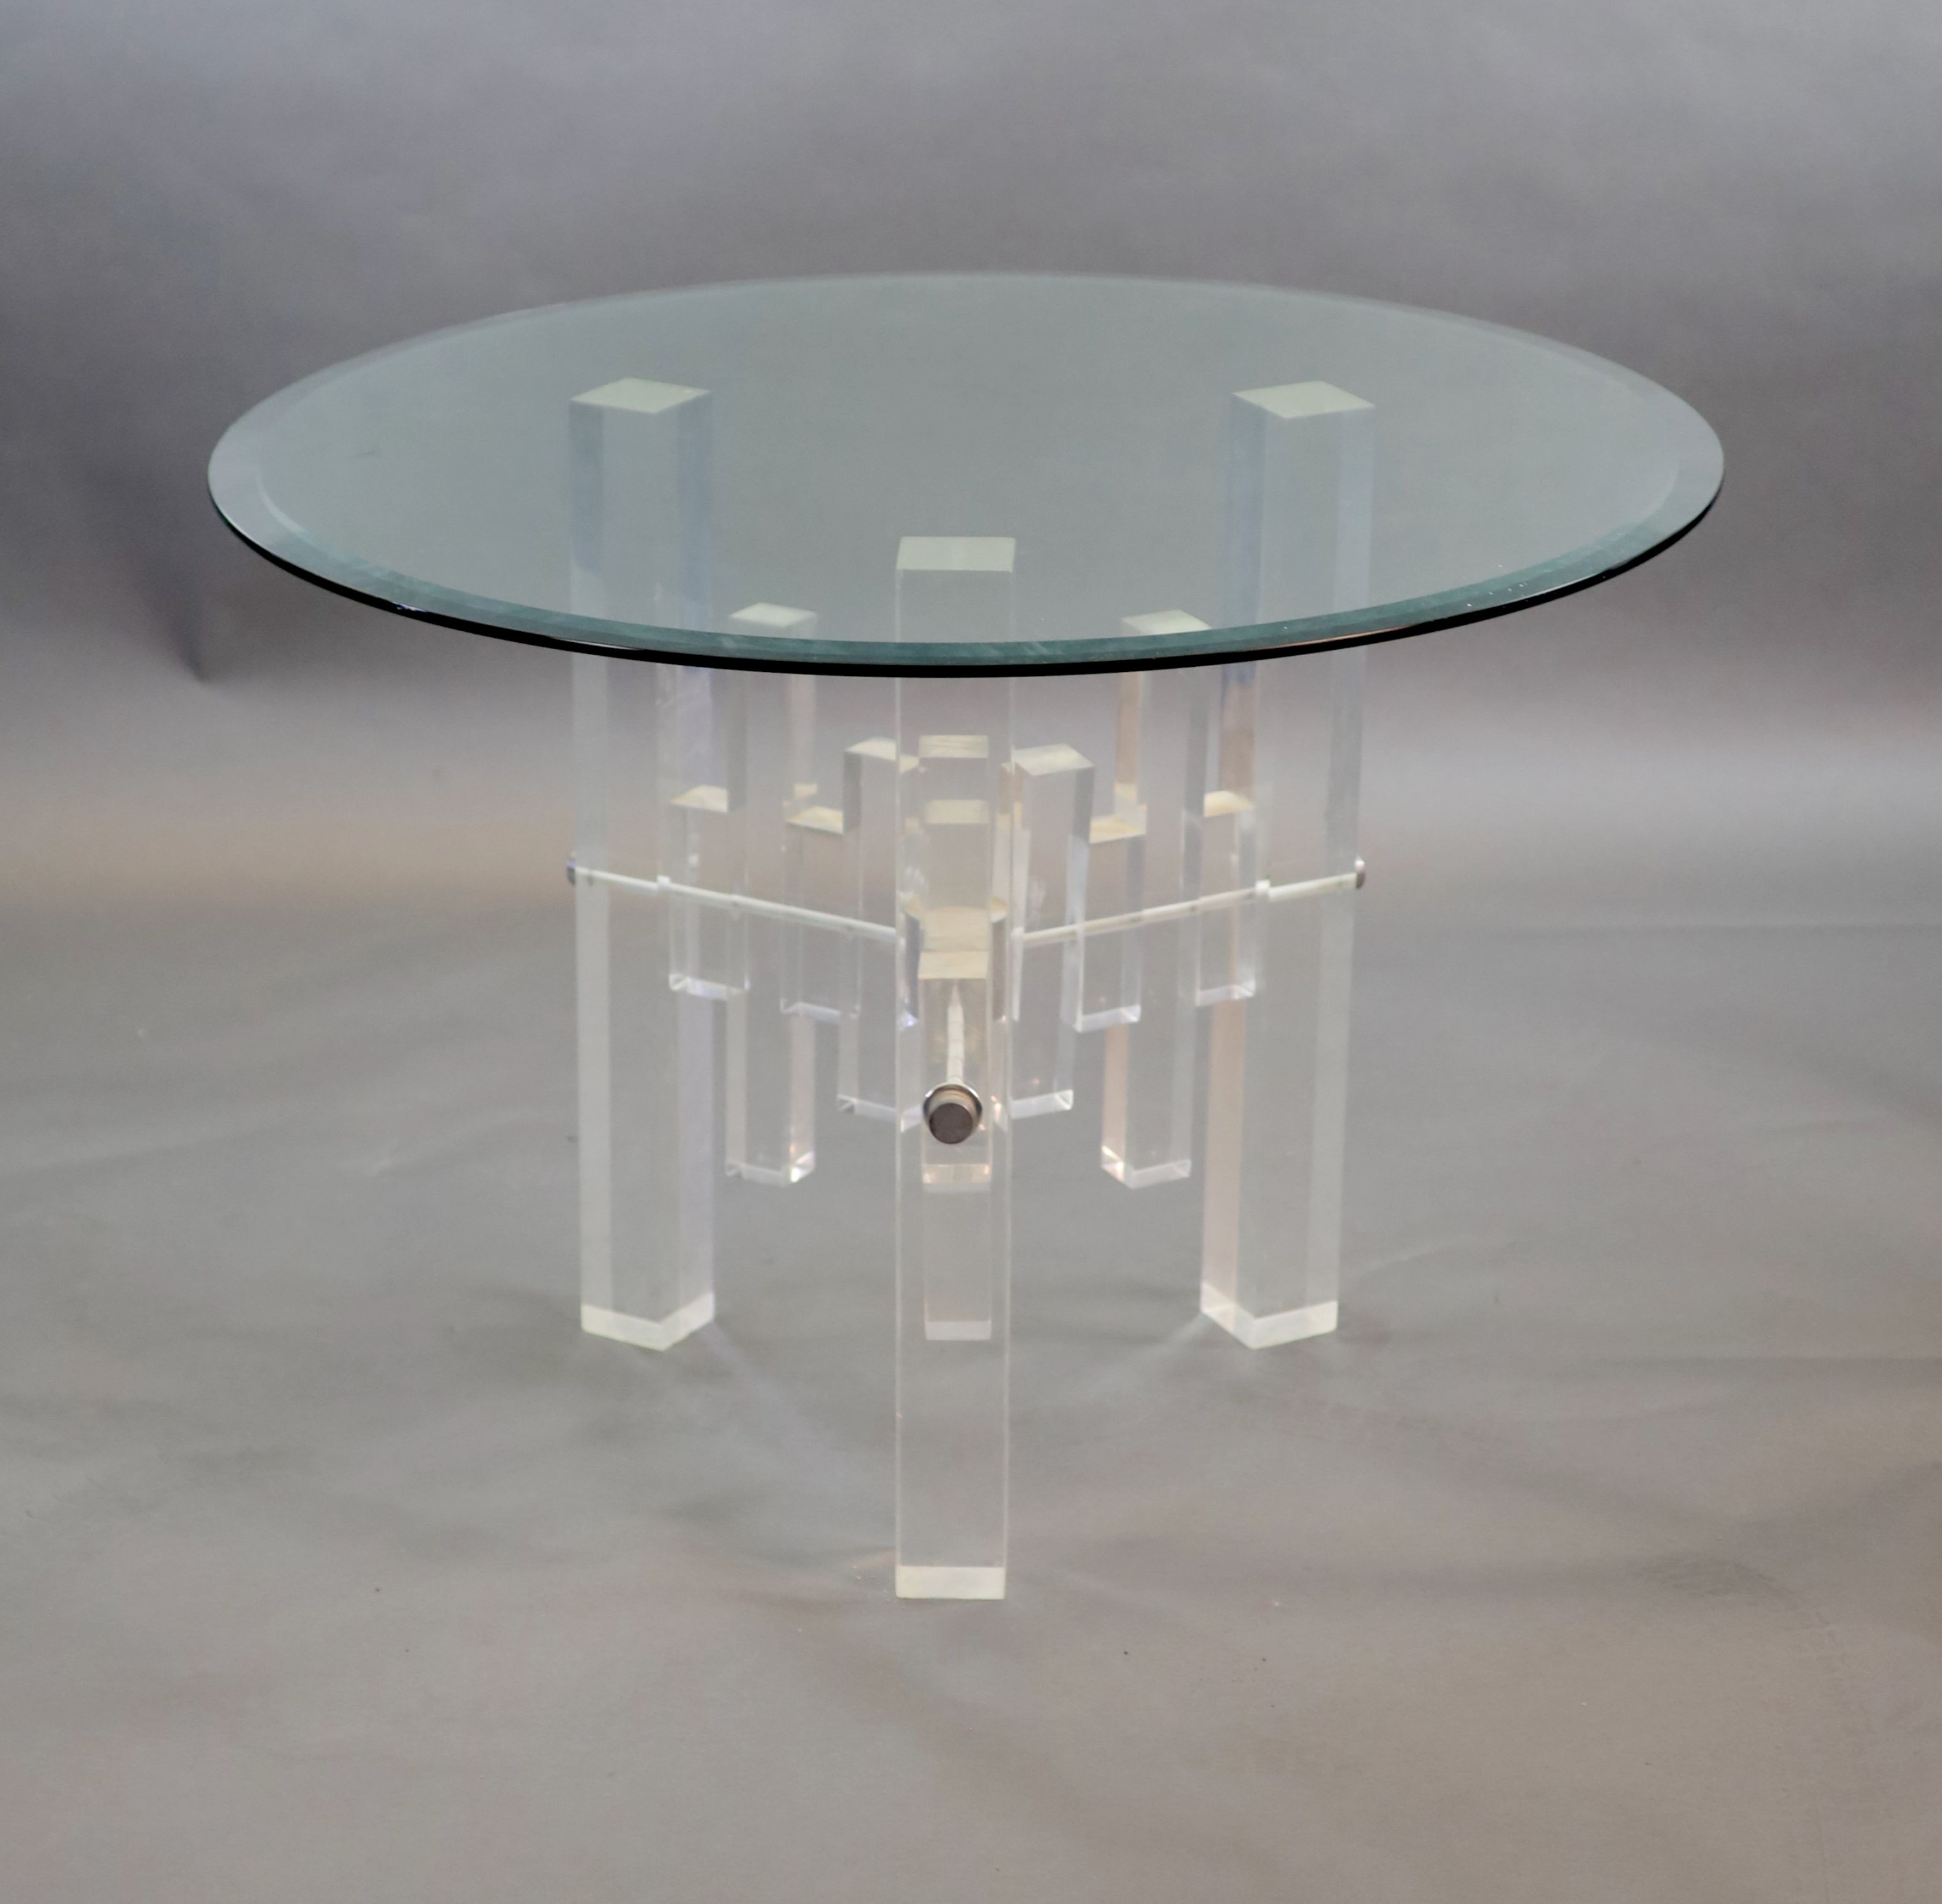 A 1970's German glass top table 107cm diameter, 76cm high.